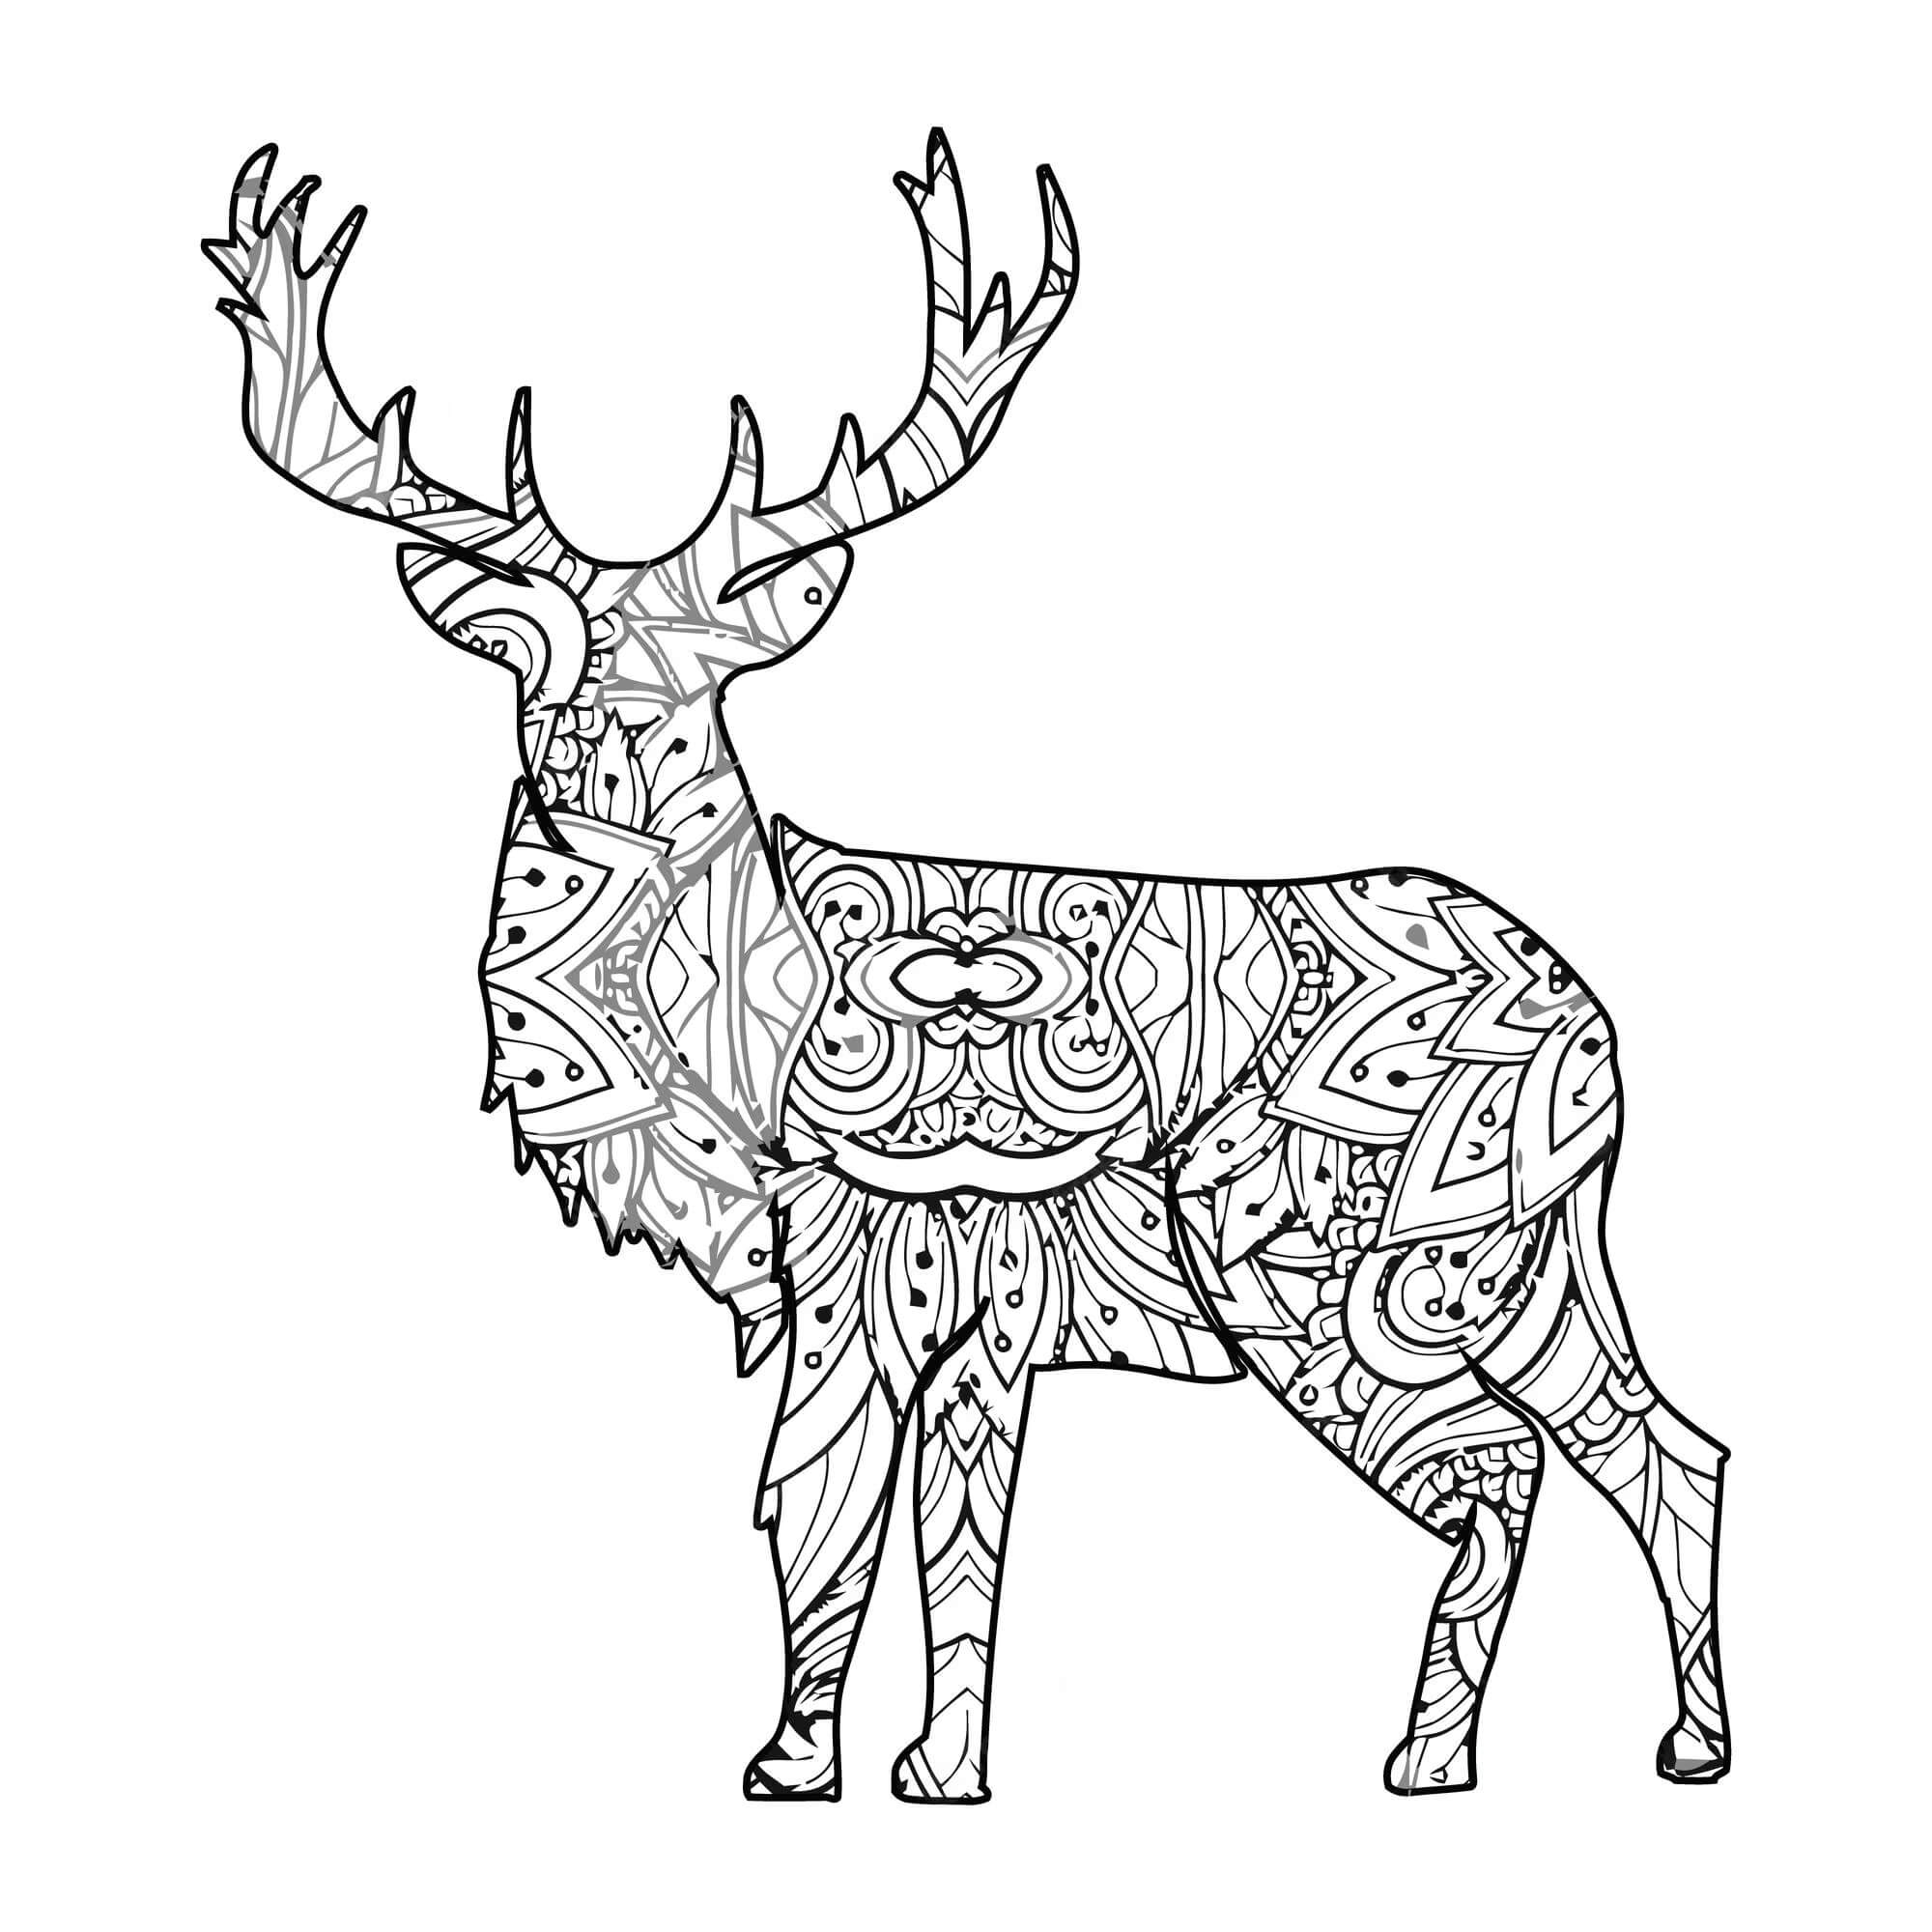 Mandala Deer Coloring Page - Sheet 4 Mandalas